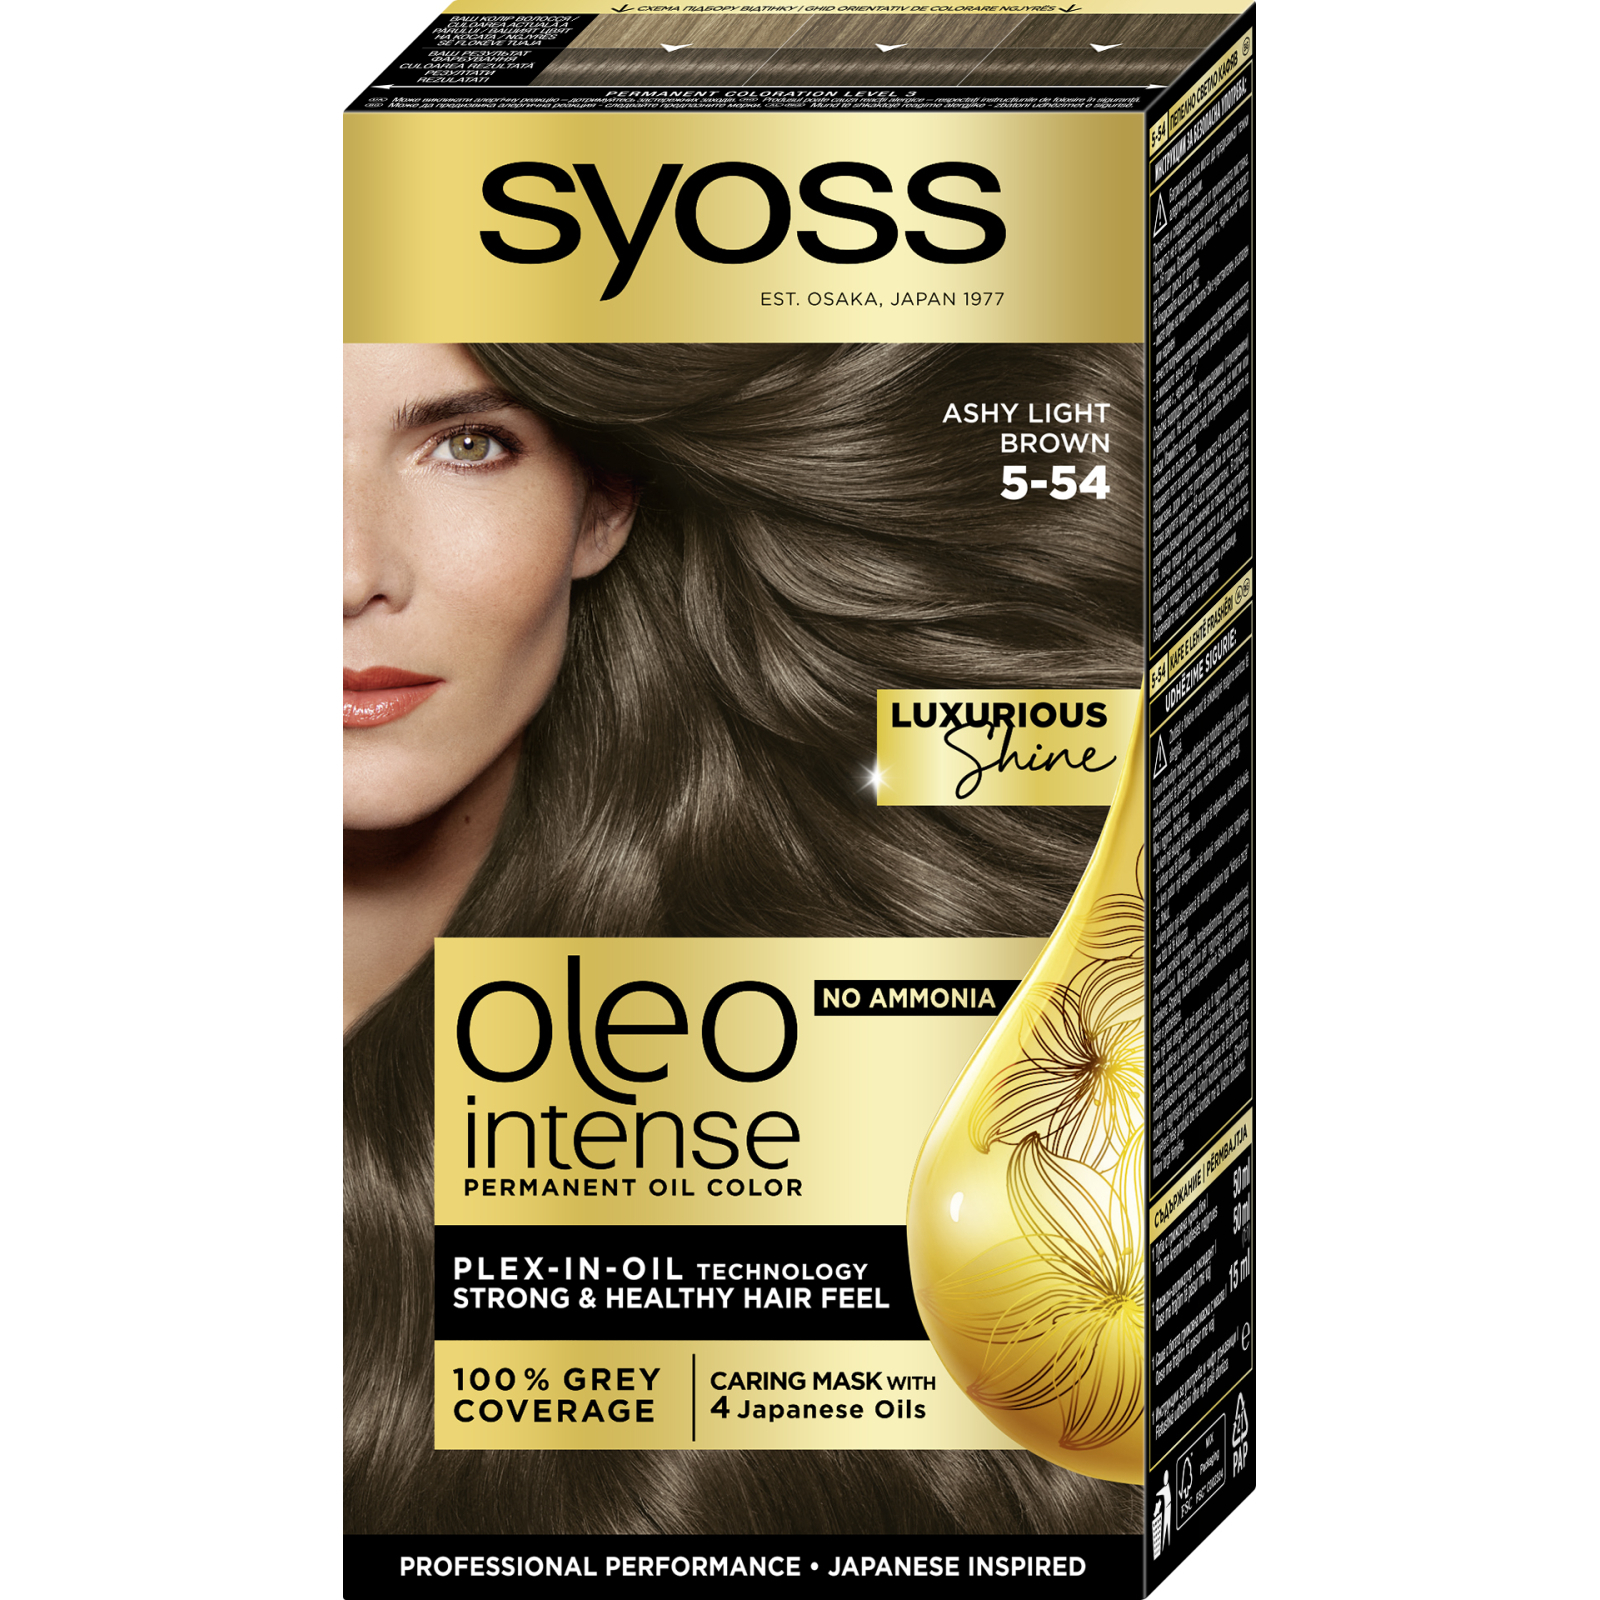 Краска для волос Syoss Oleo Intense 10-50 Дымчатый Блонд 115 мл (4015100199727)